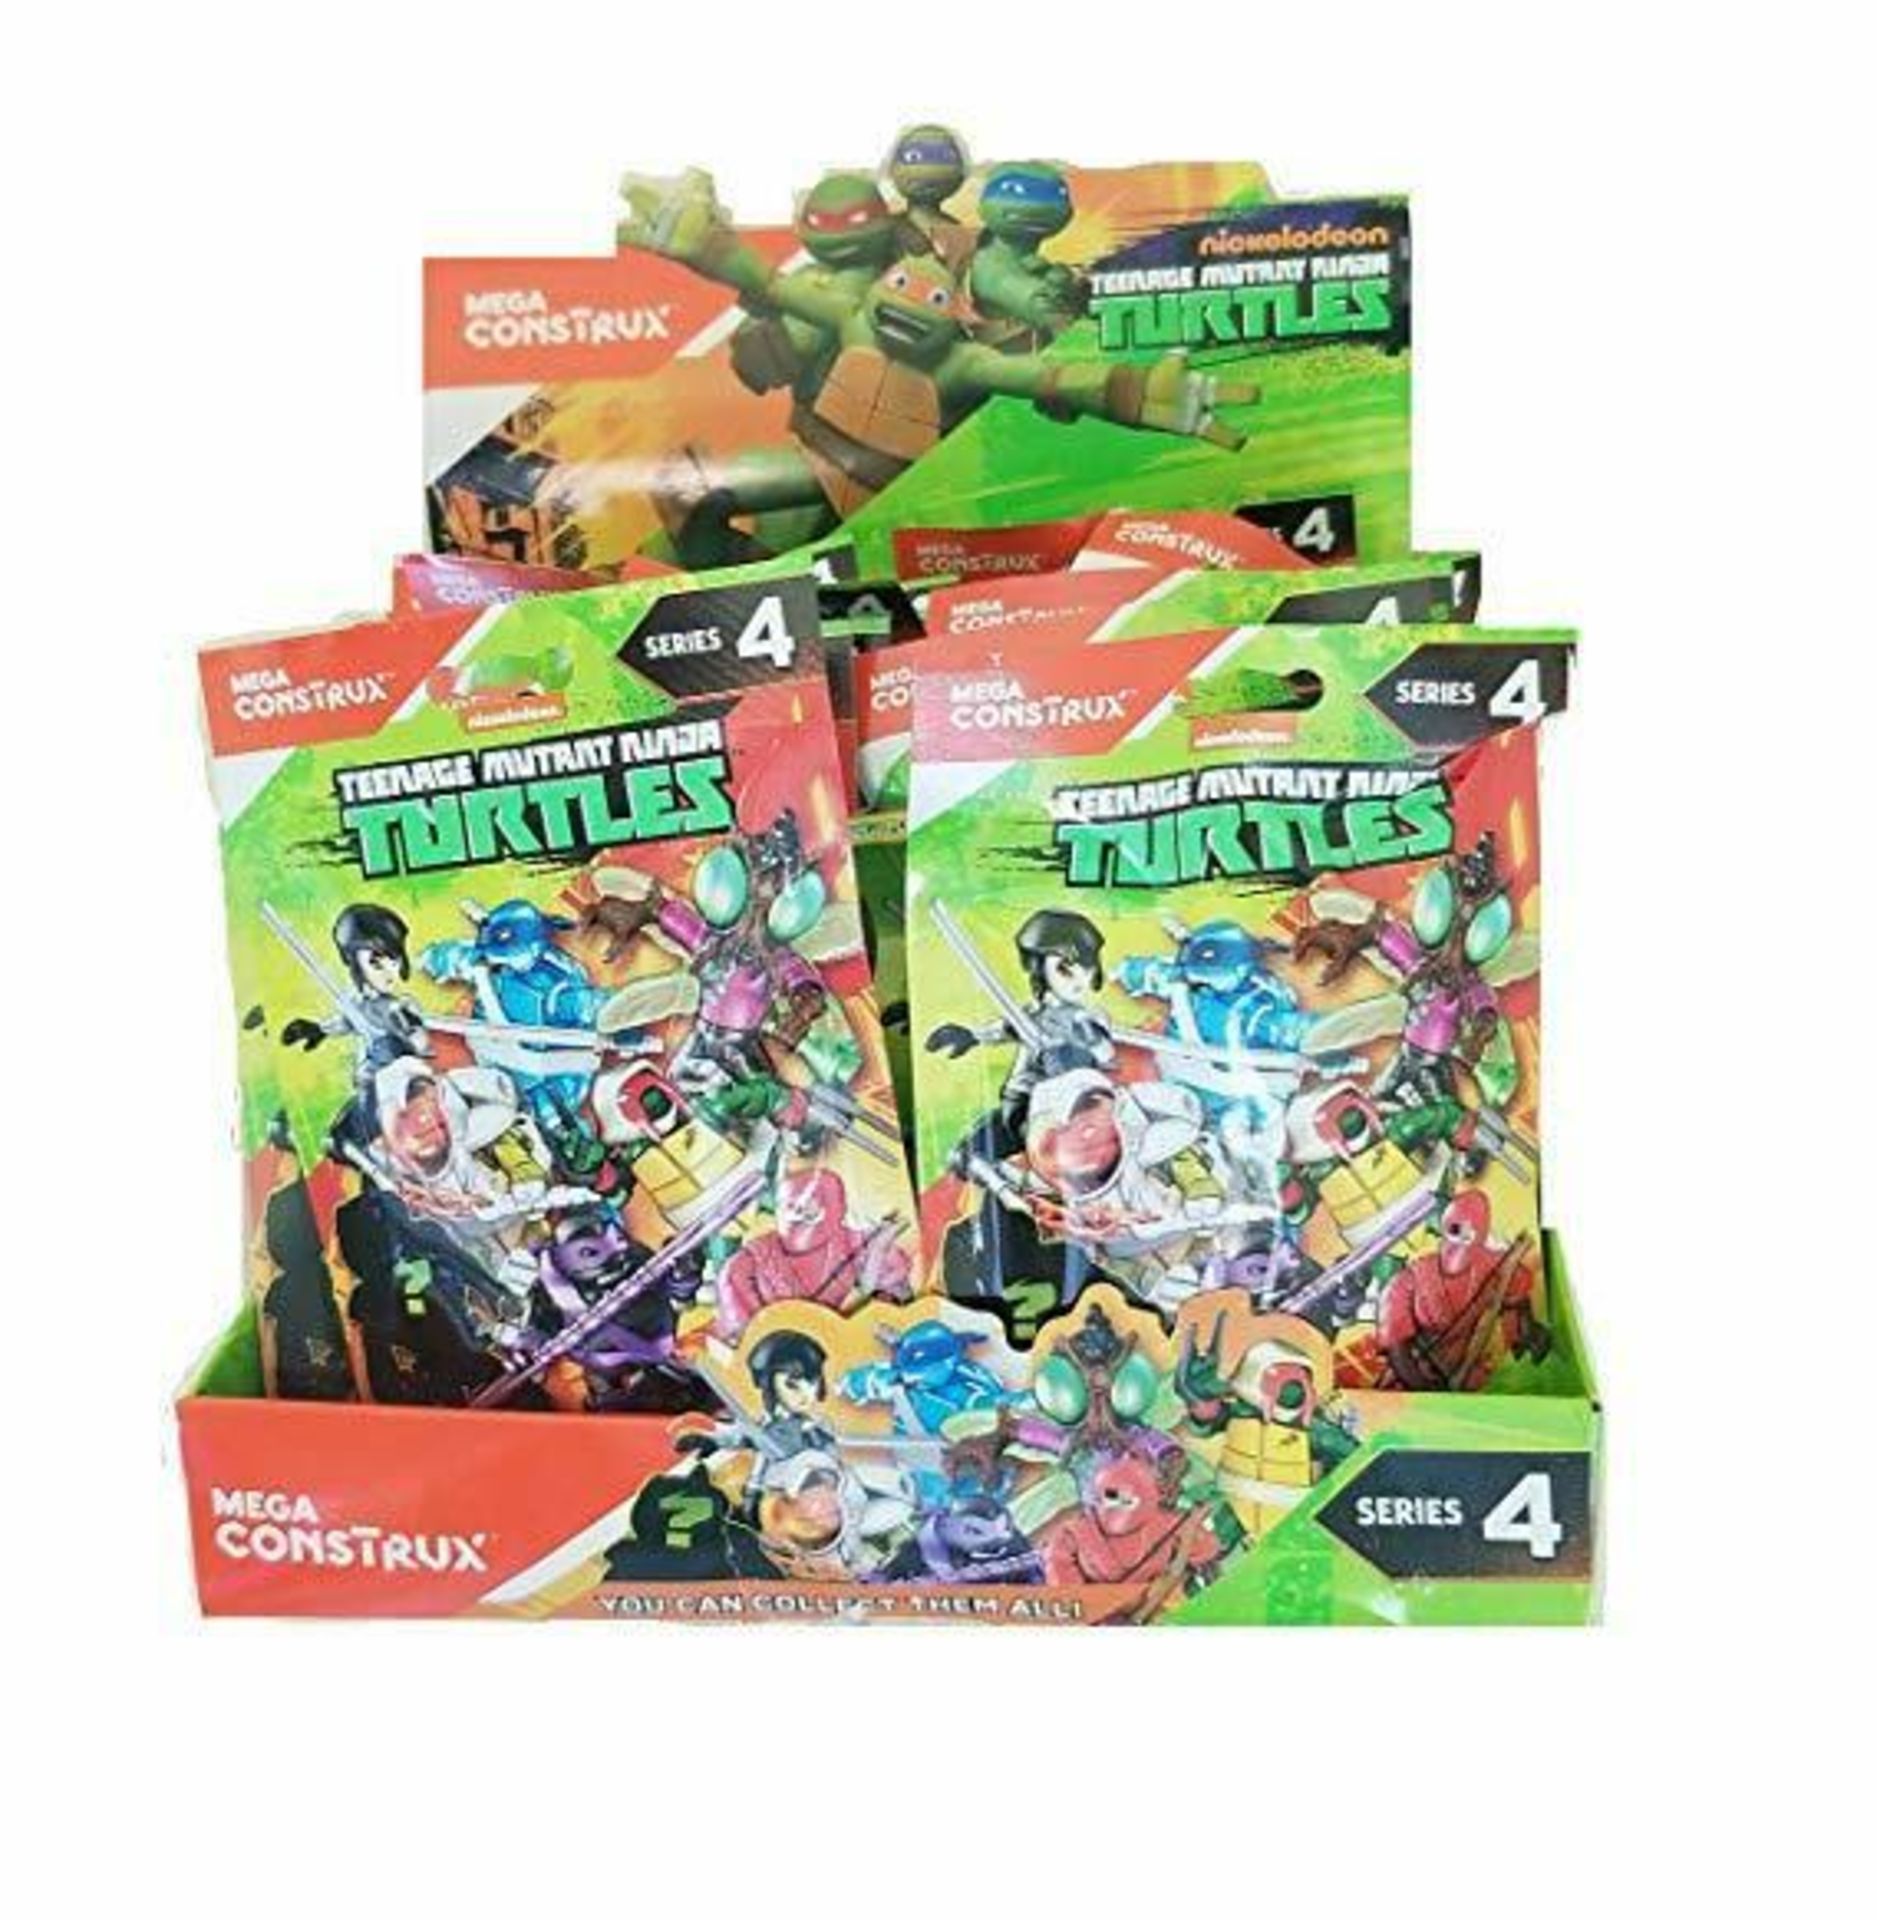 Carton of Teenage Mutant Ninja Turtle lucky bags Carton of Teenage Mutant Ninja Turtle lucky bags